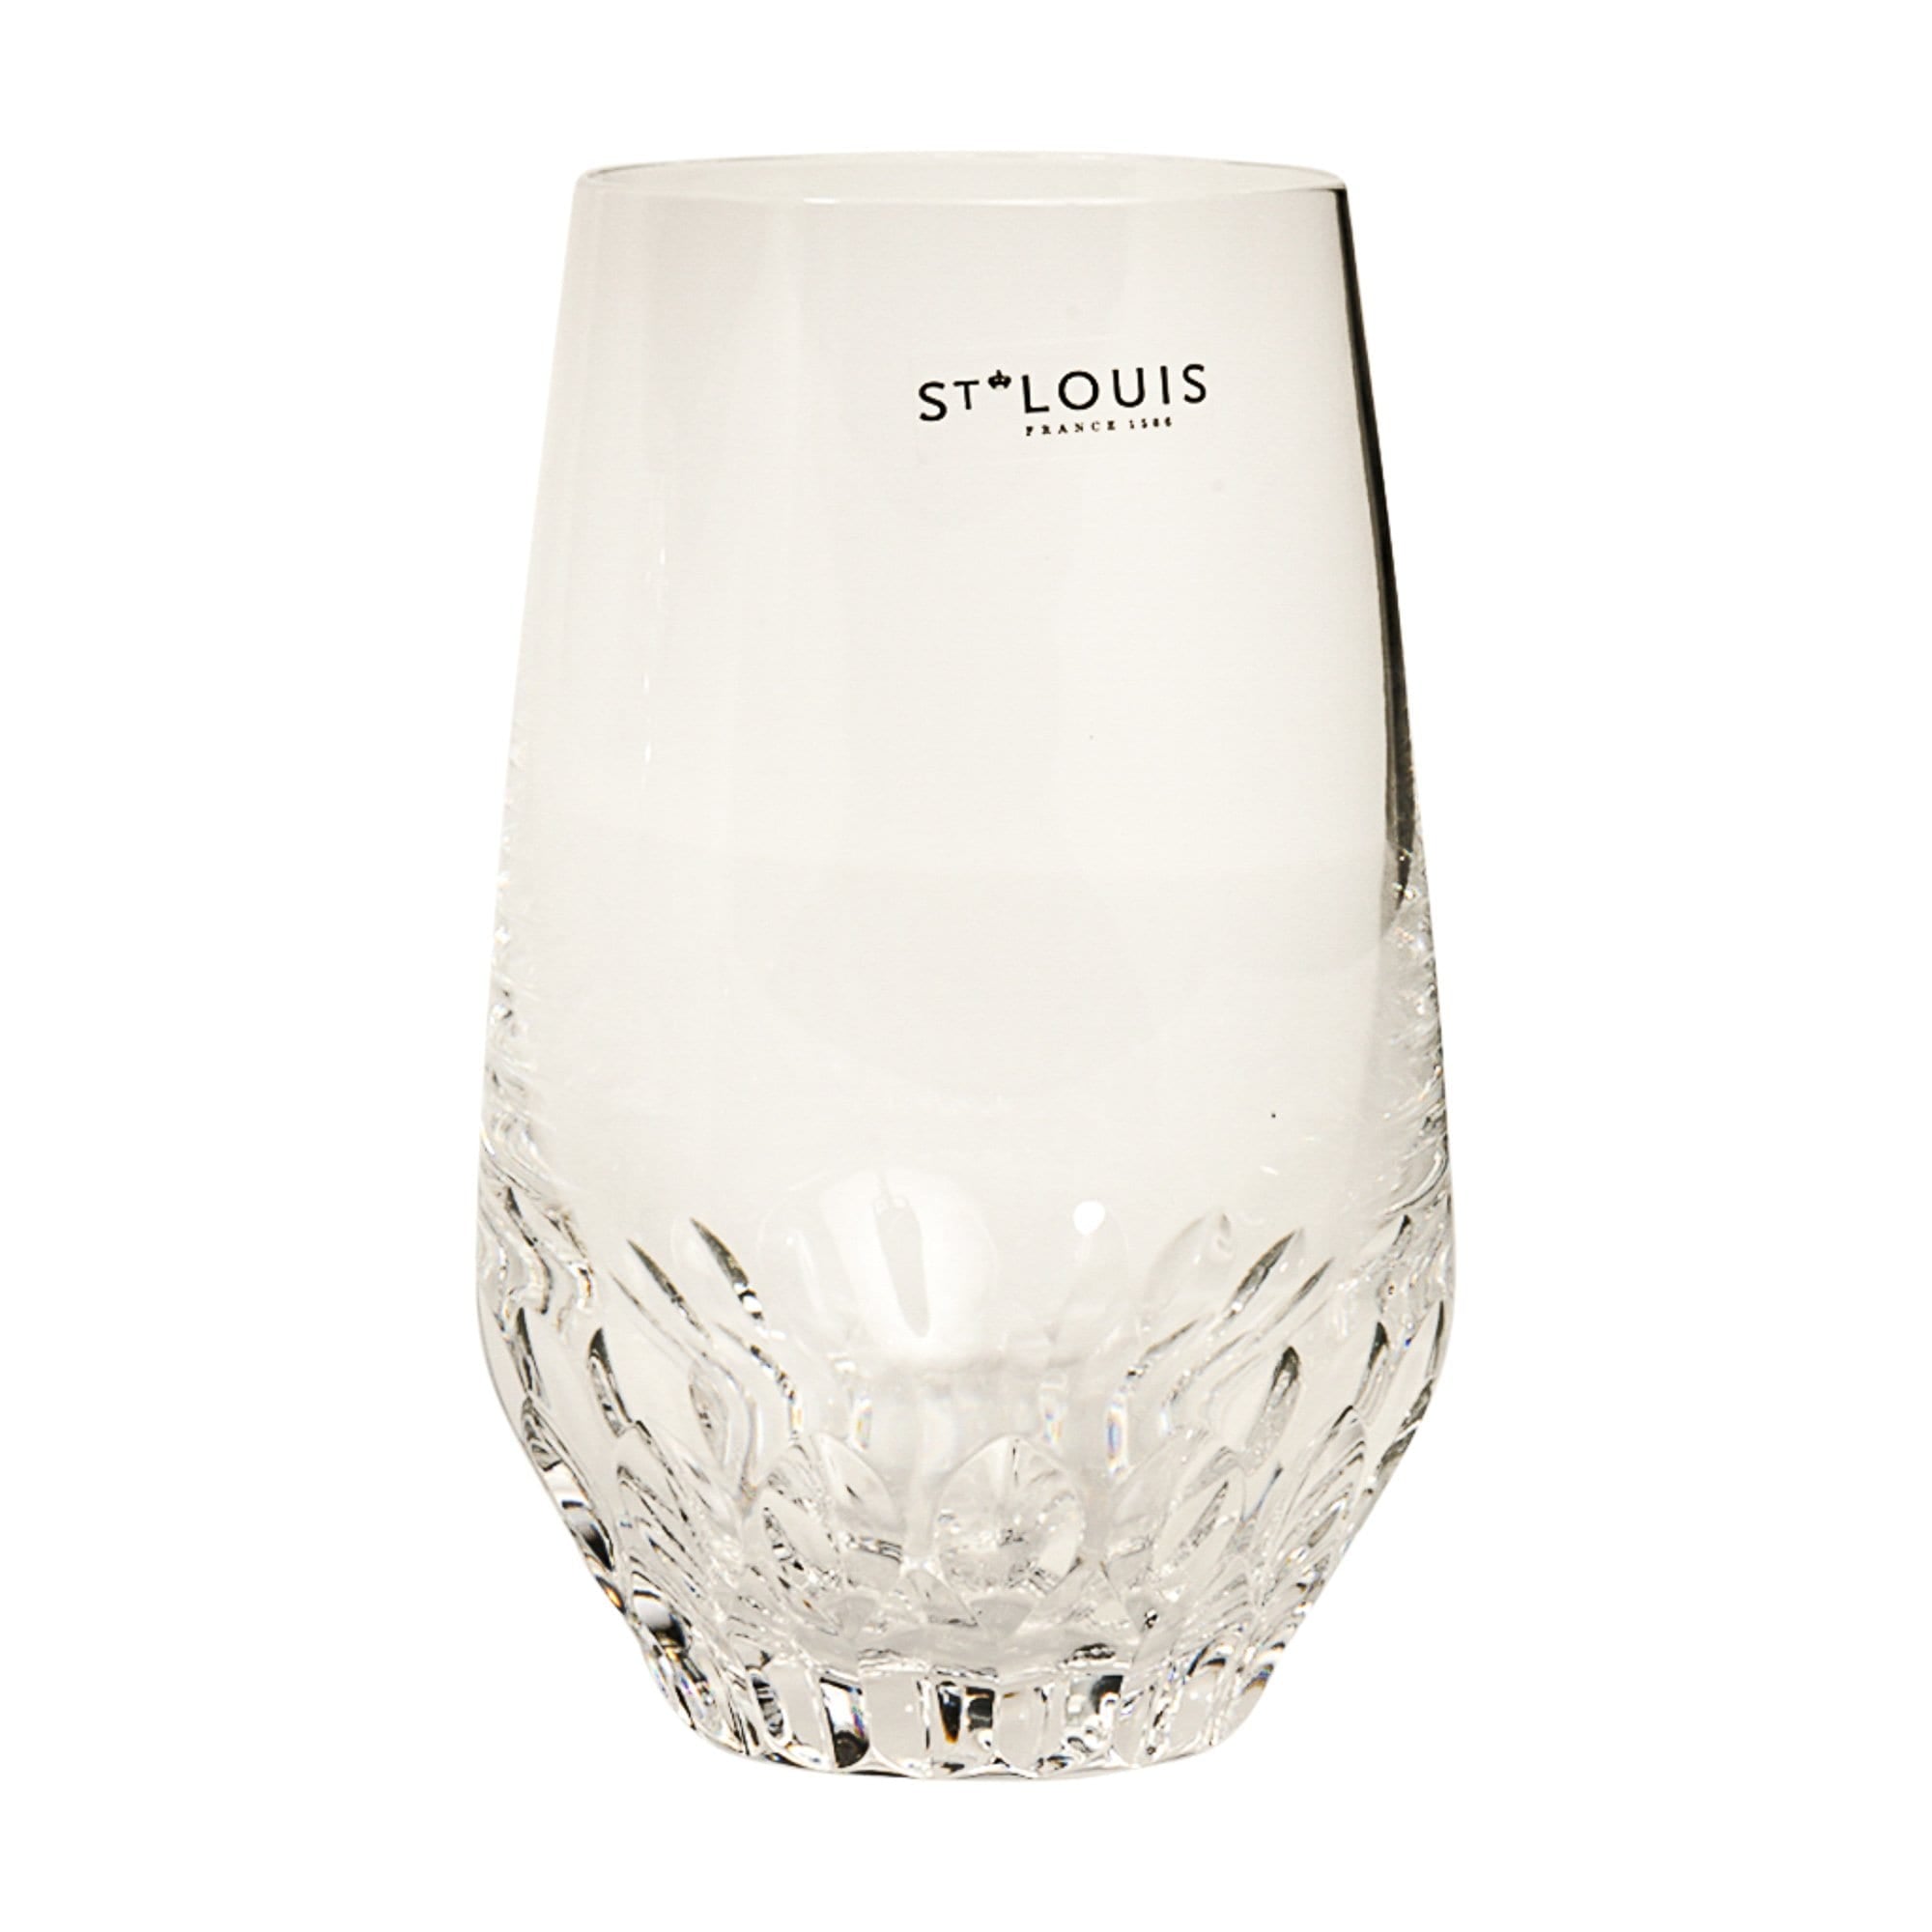 Hermes Saint Louis Folia Crystal Highball Glasses Set of 4 New w/ Box